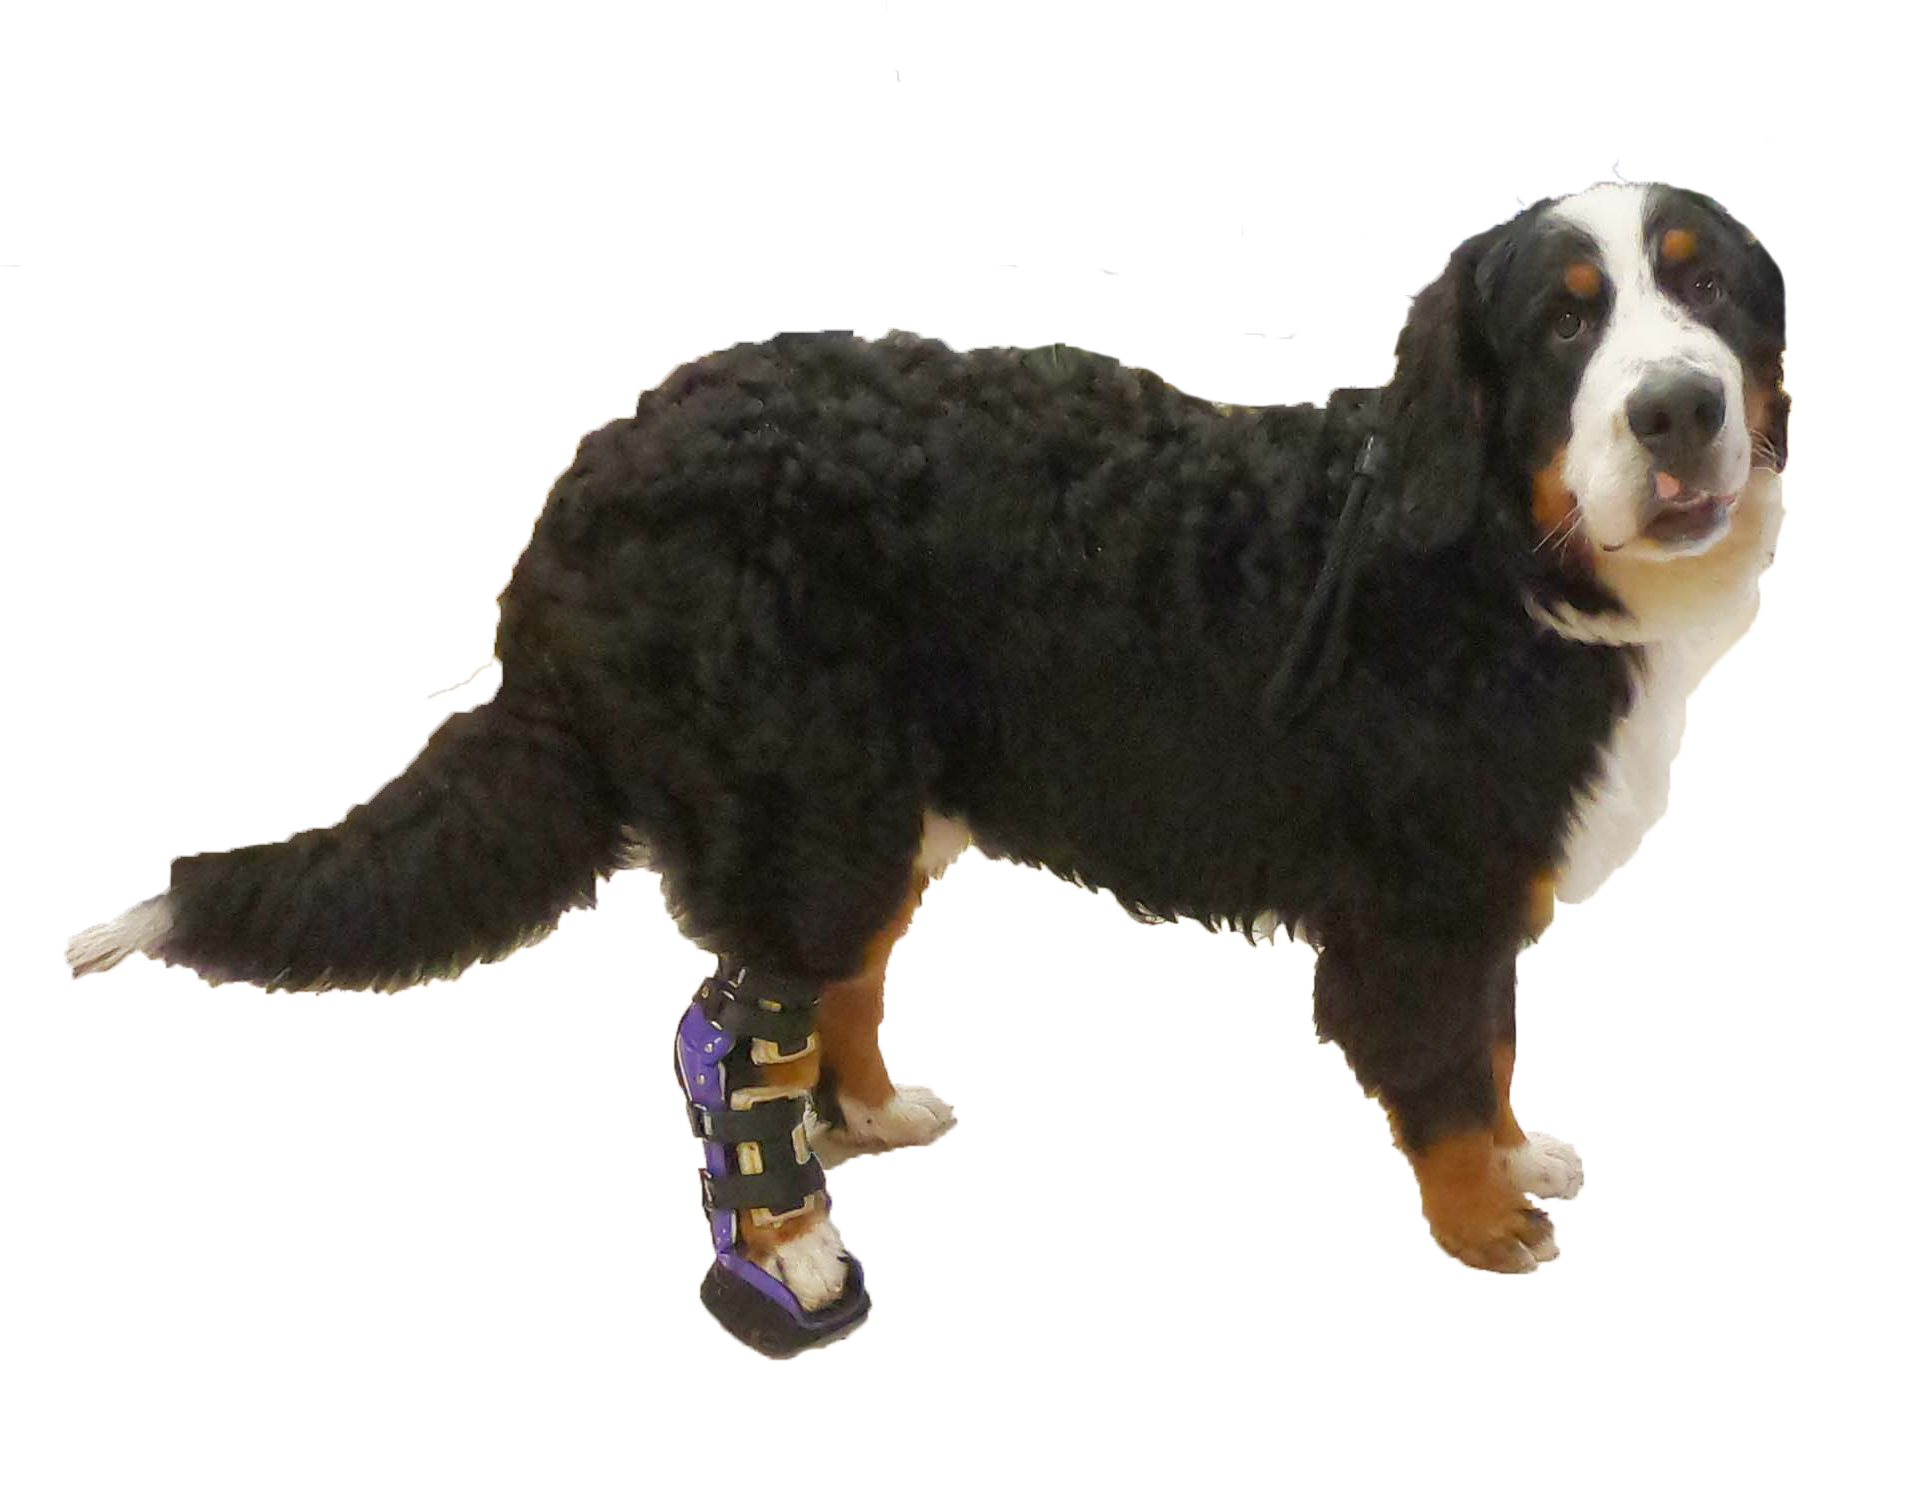 A large dog wearing a custom ankle brace